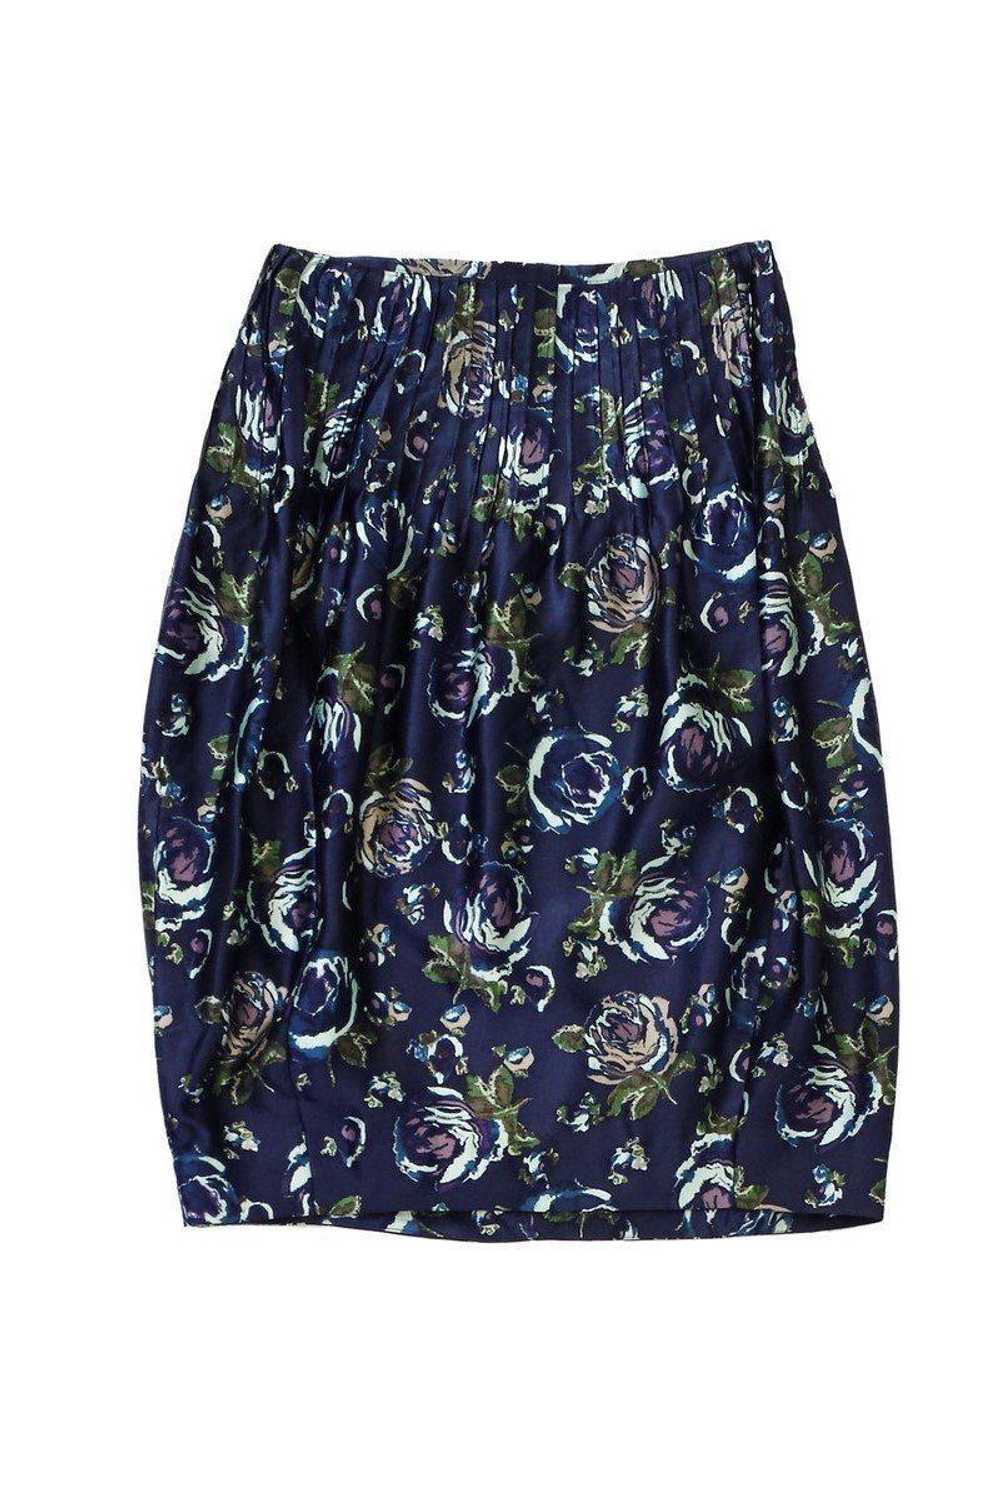 Suno - Blue Floral Print Silk Skirt Sz XS - image 1